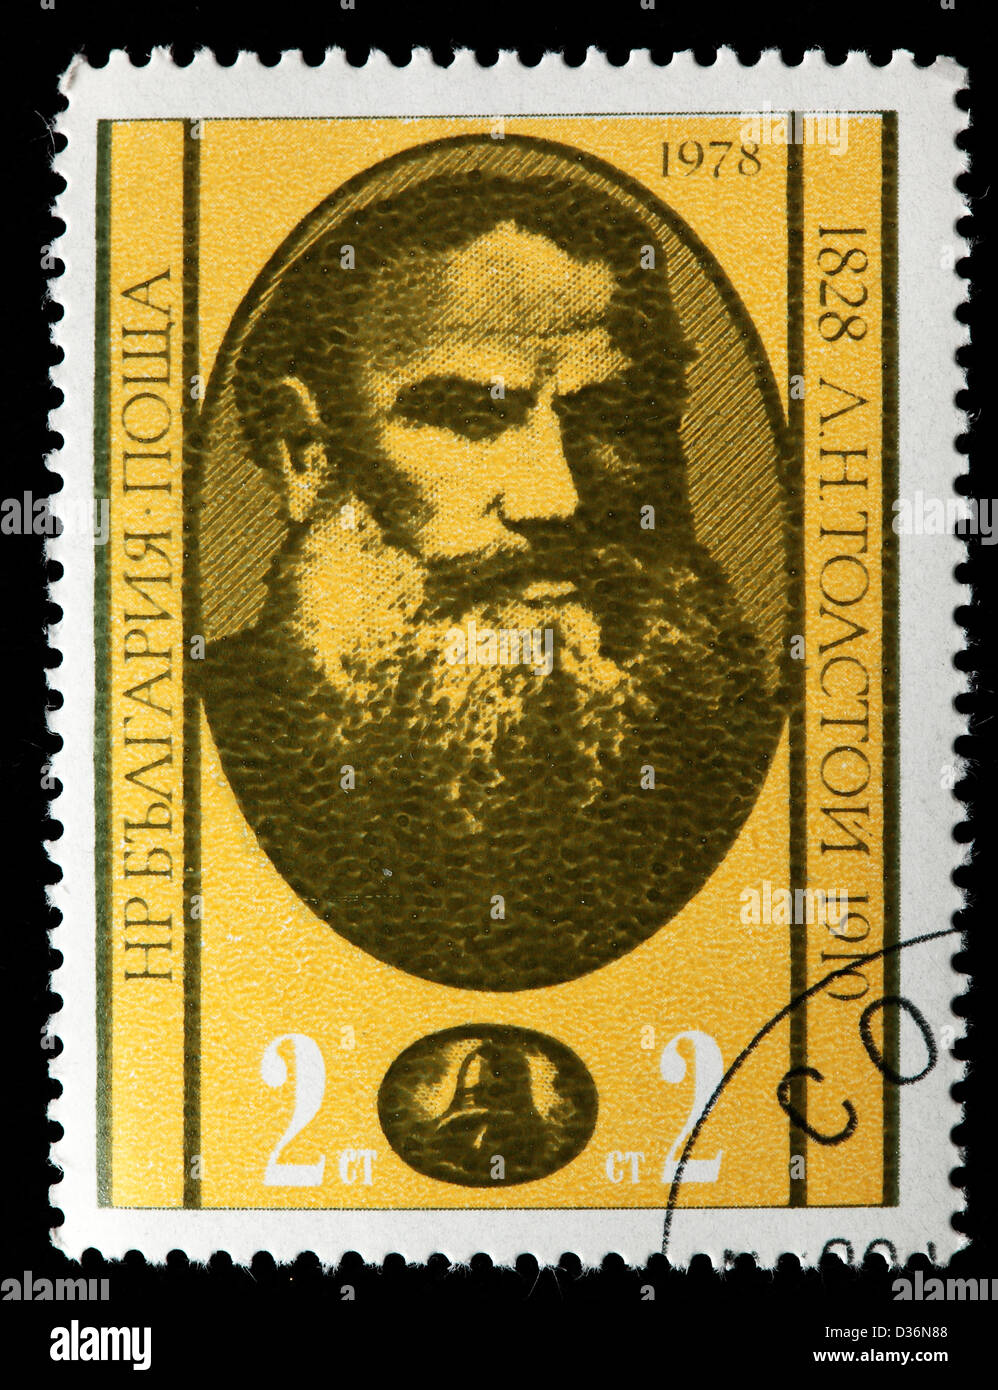 Leo Tolstoy, postage stamp, Bulgaria, 1978 Stock Photo